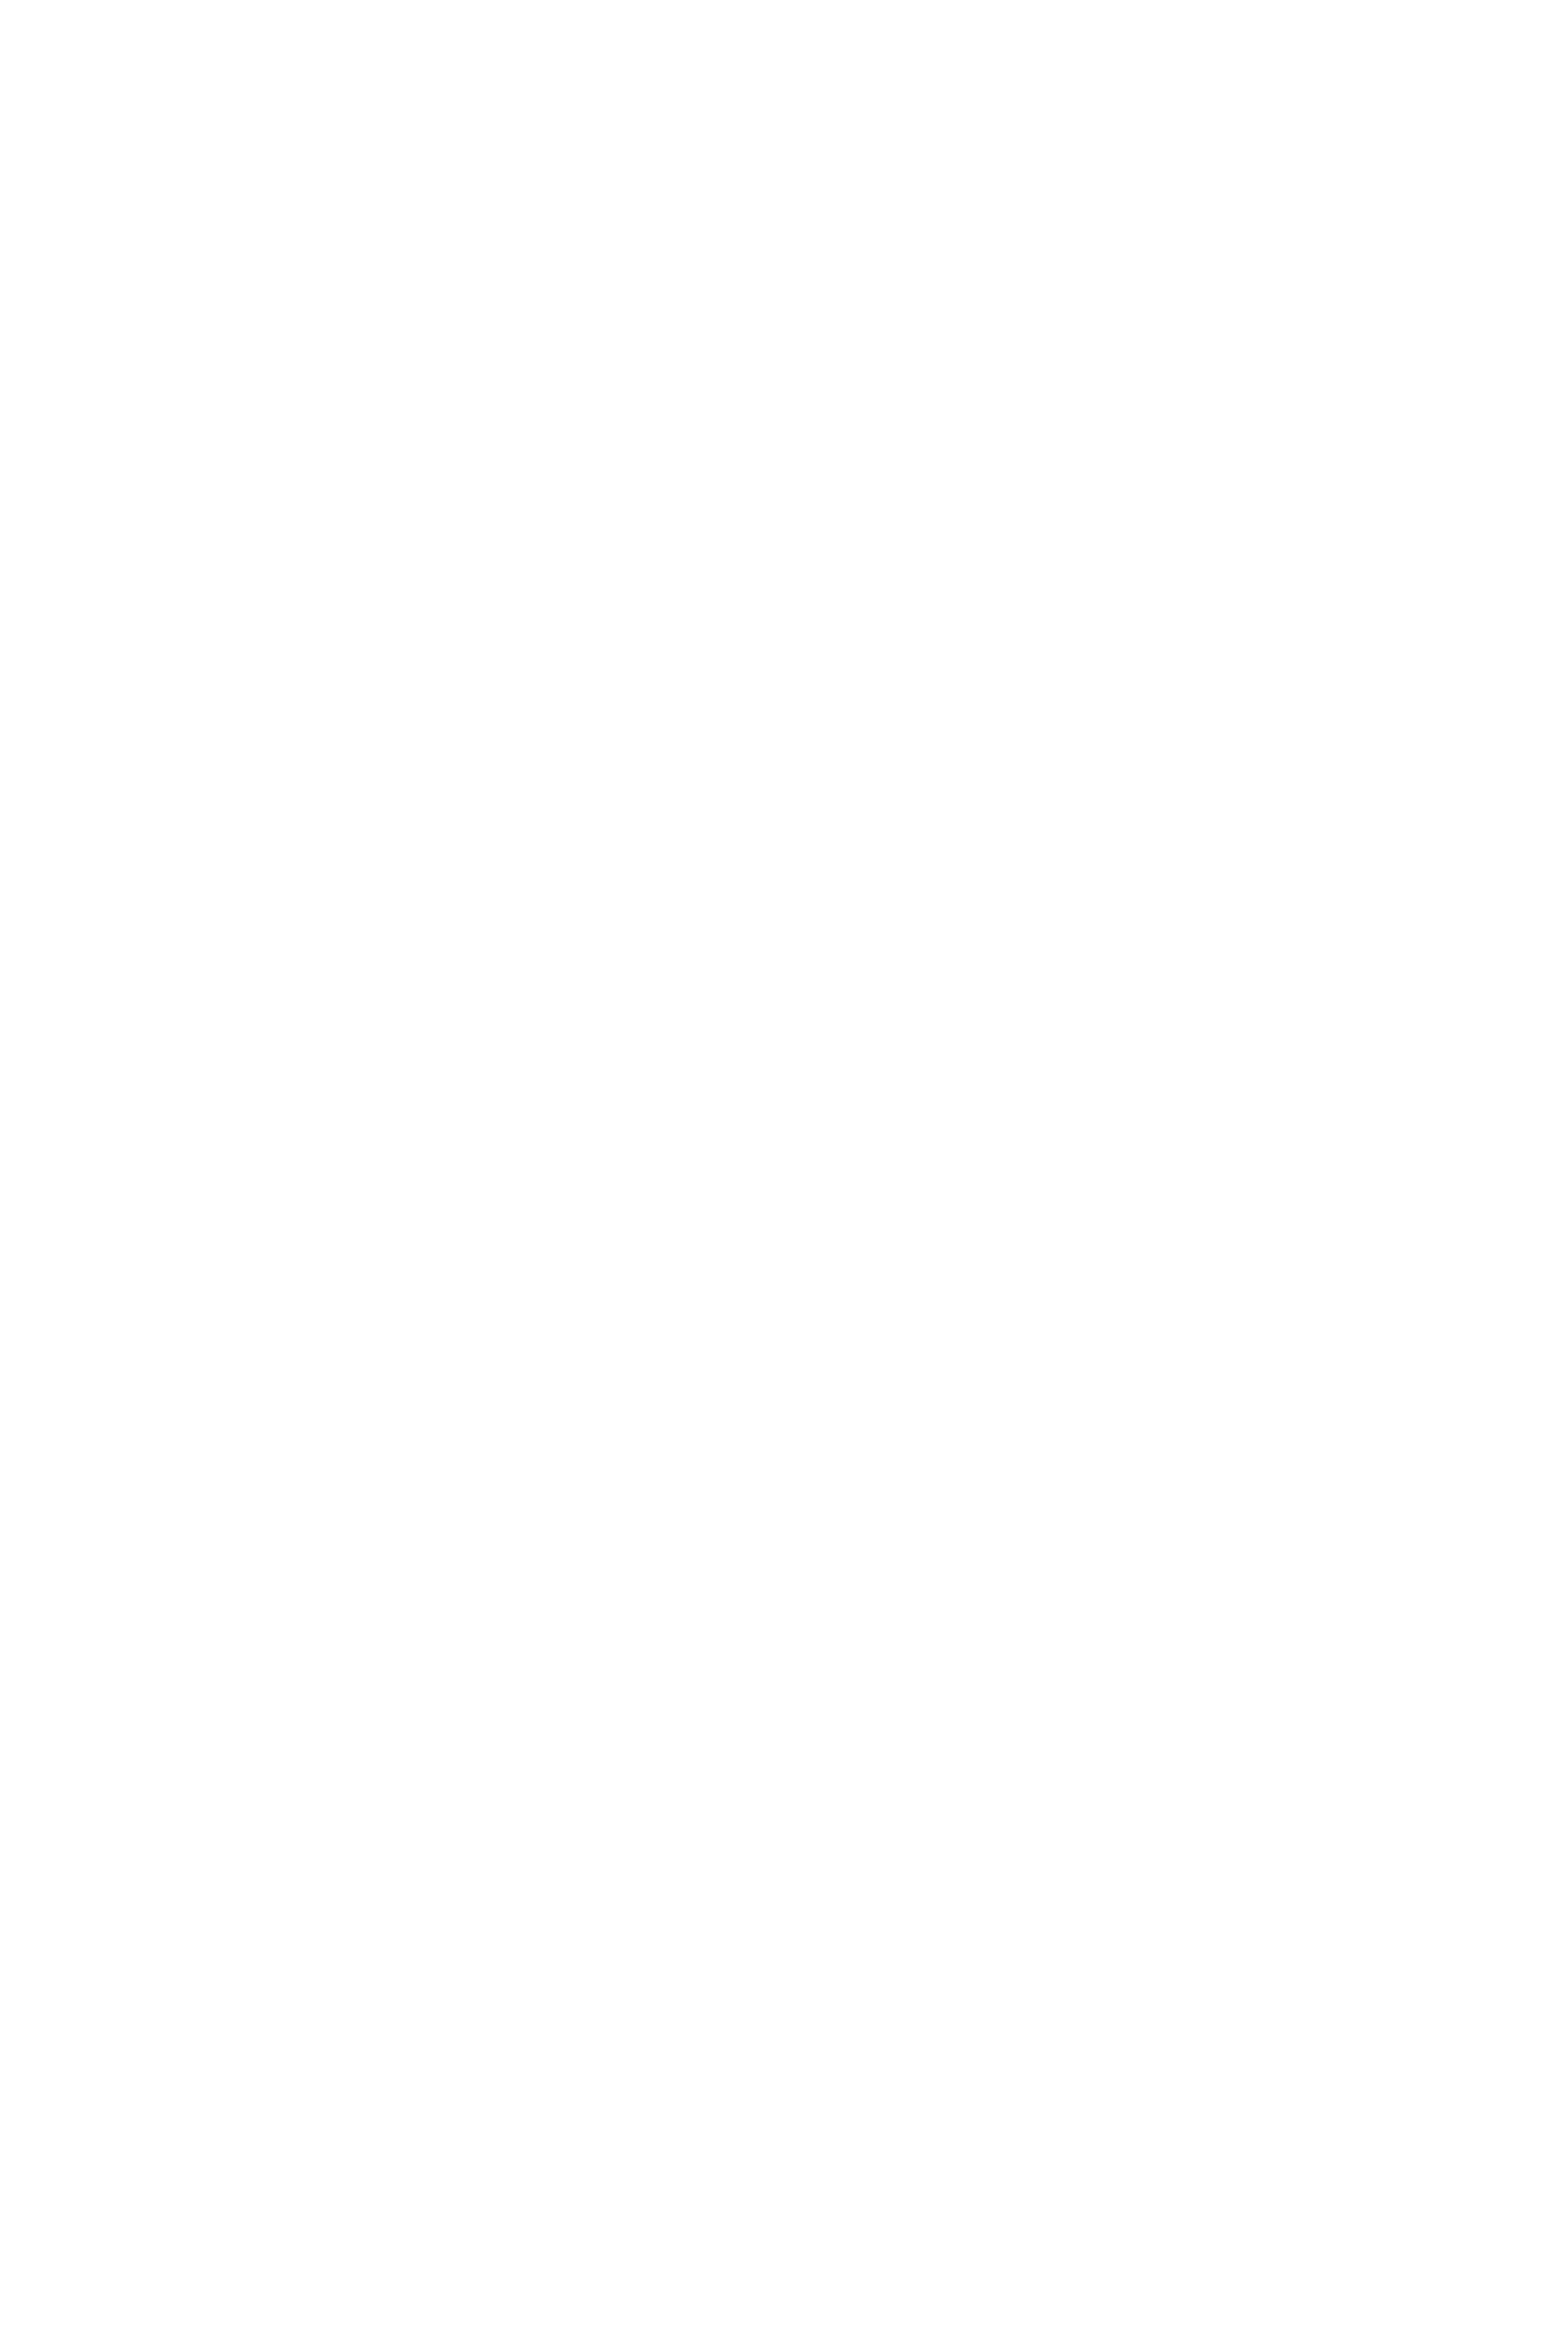 Danielle Levitt studio fashion photography celebrity portrait of singer Caroline Polachek posing with hands on head against white backdrop wearing beige trench coat for V Magazine editorial